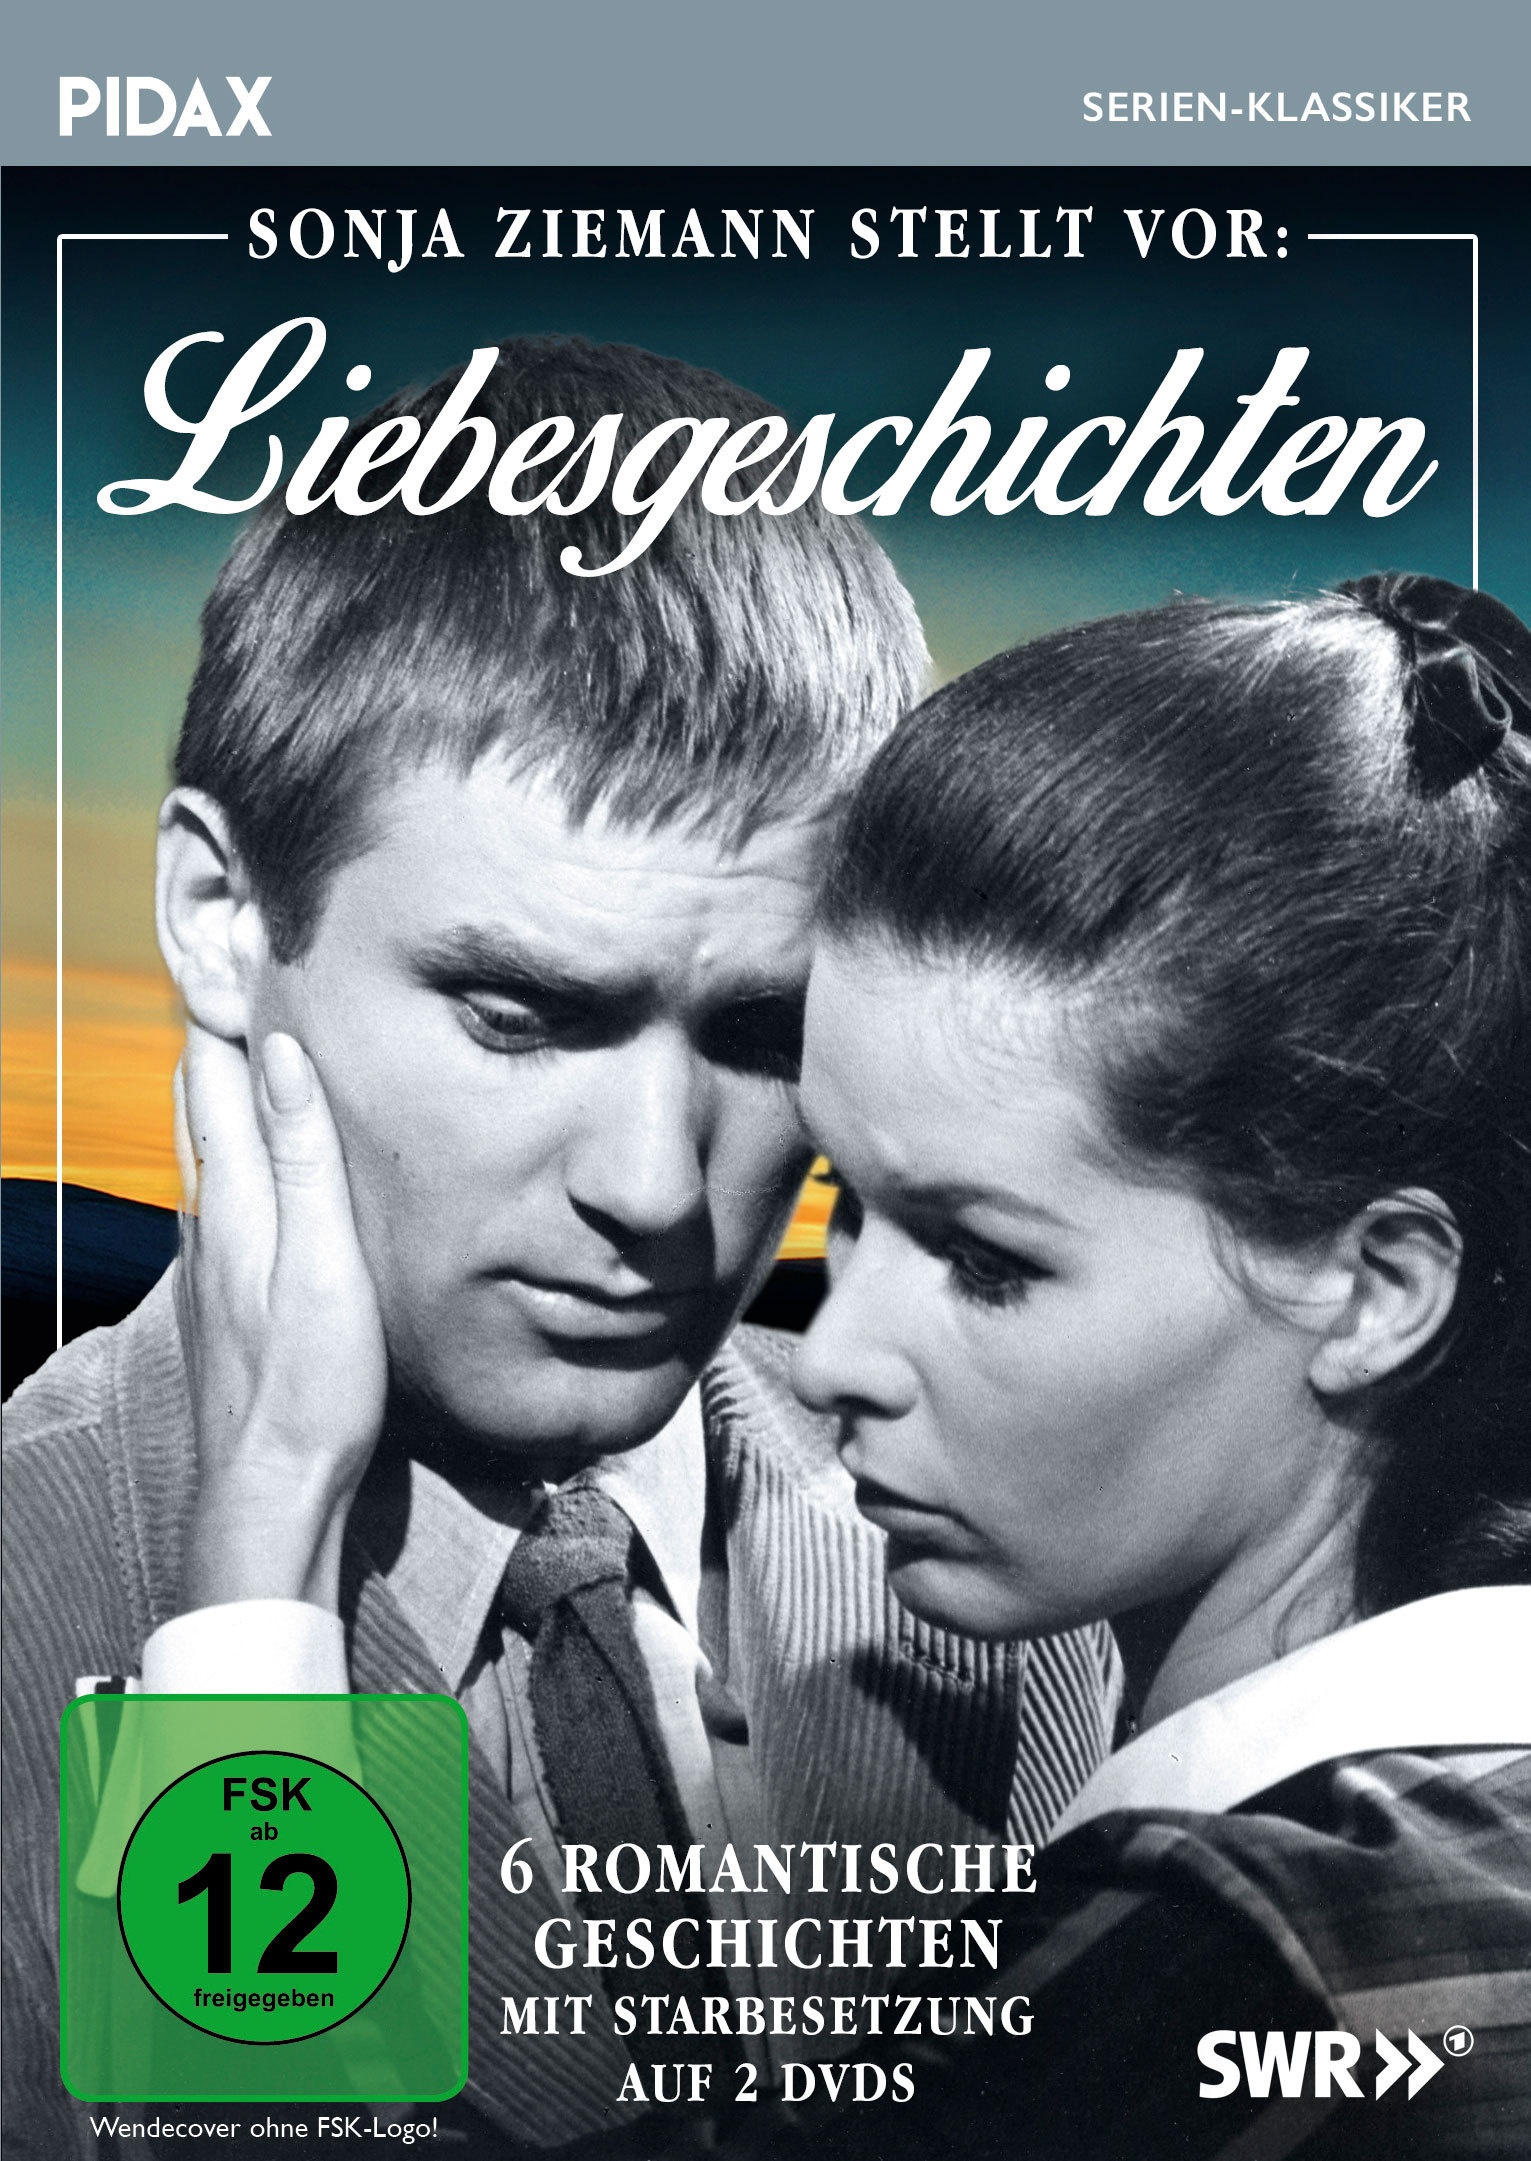 Sonja Ziemann Stellt Vor: Liebesgeschichten (DVD)